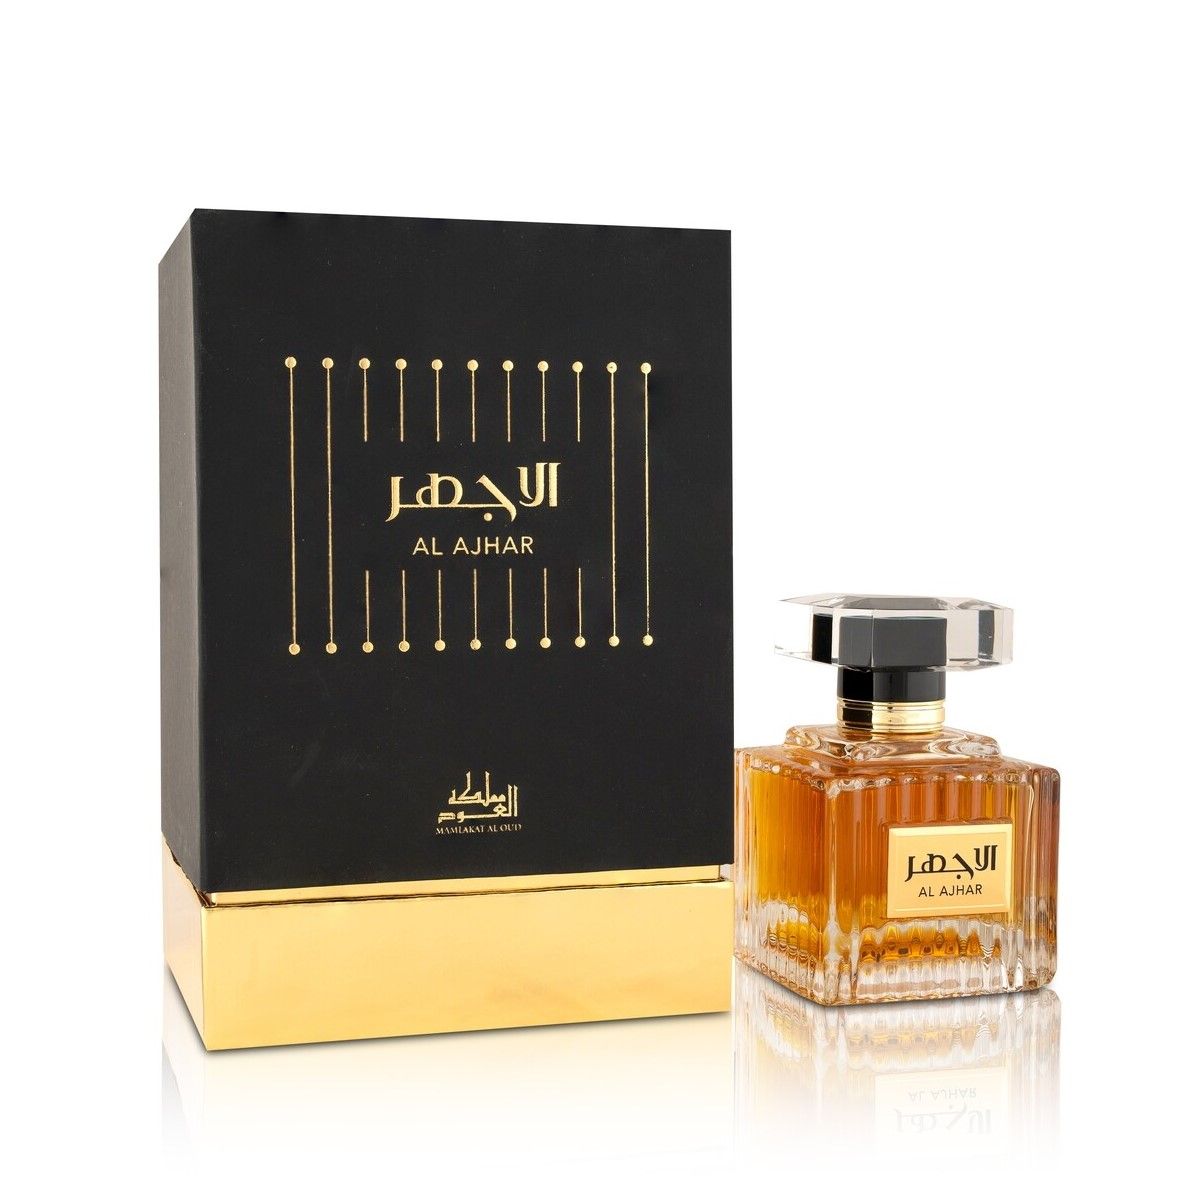 Al Ajhar Perfume Eau De Perfume 100Ml By Mamlakat Al Oud